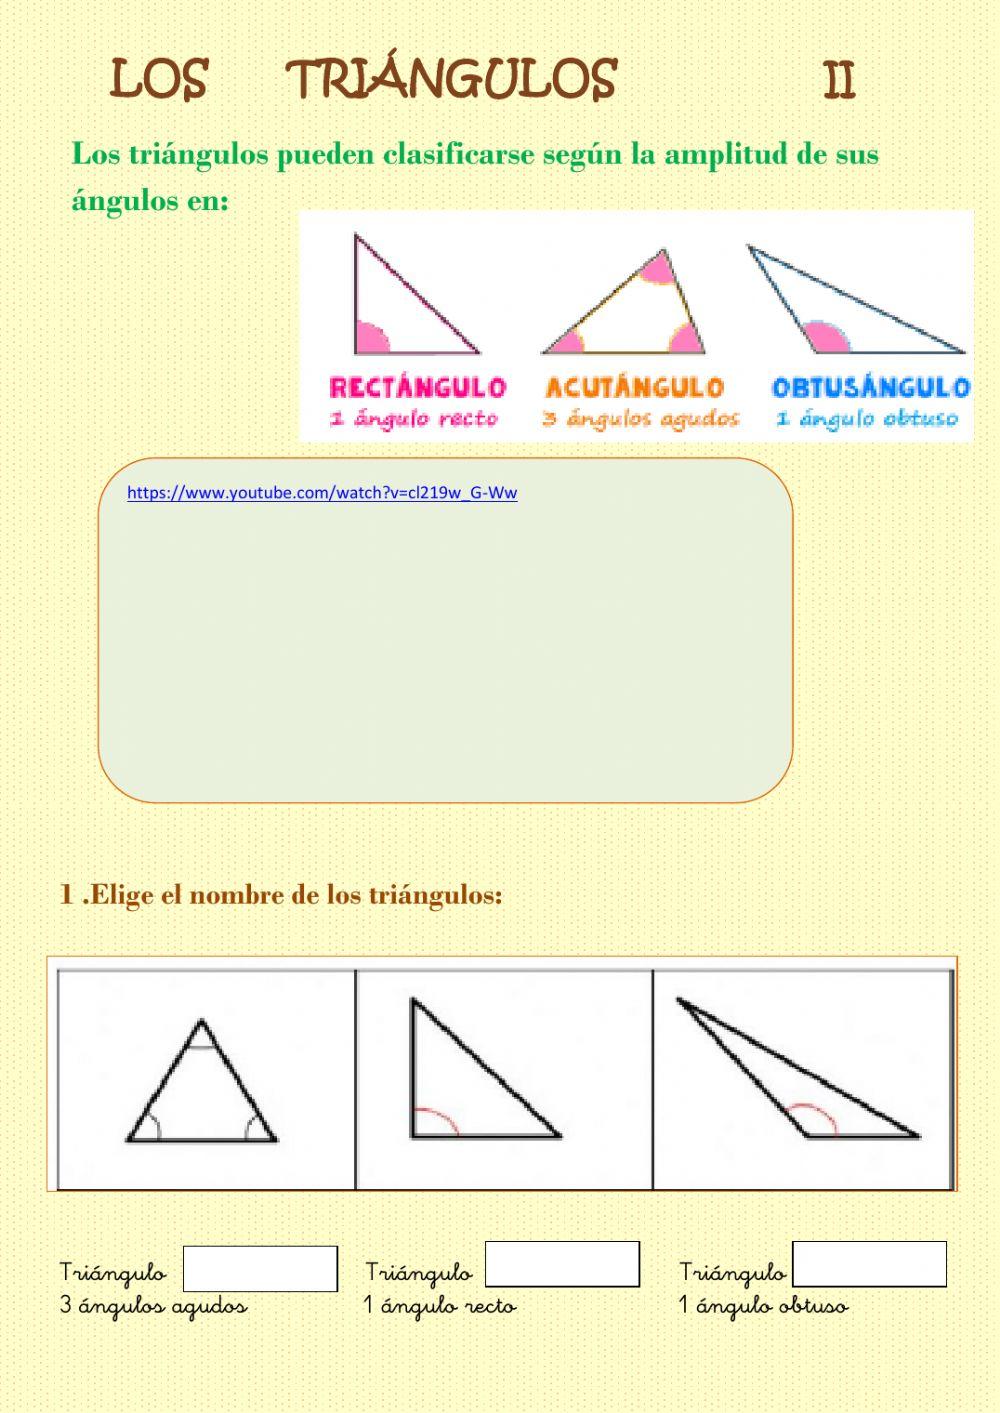 Triangulos II activity | Live Worksheets